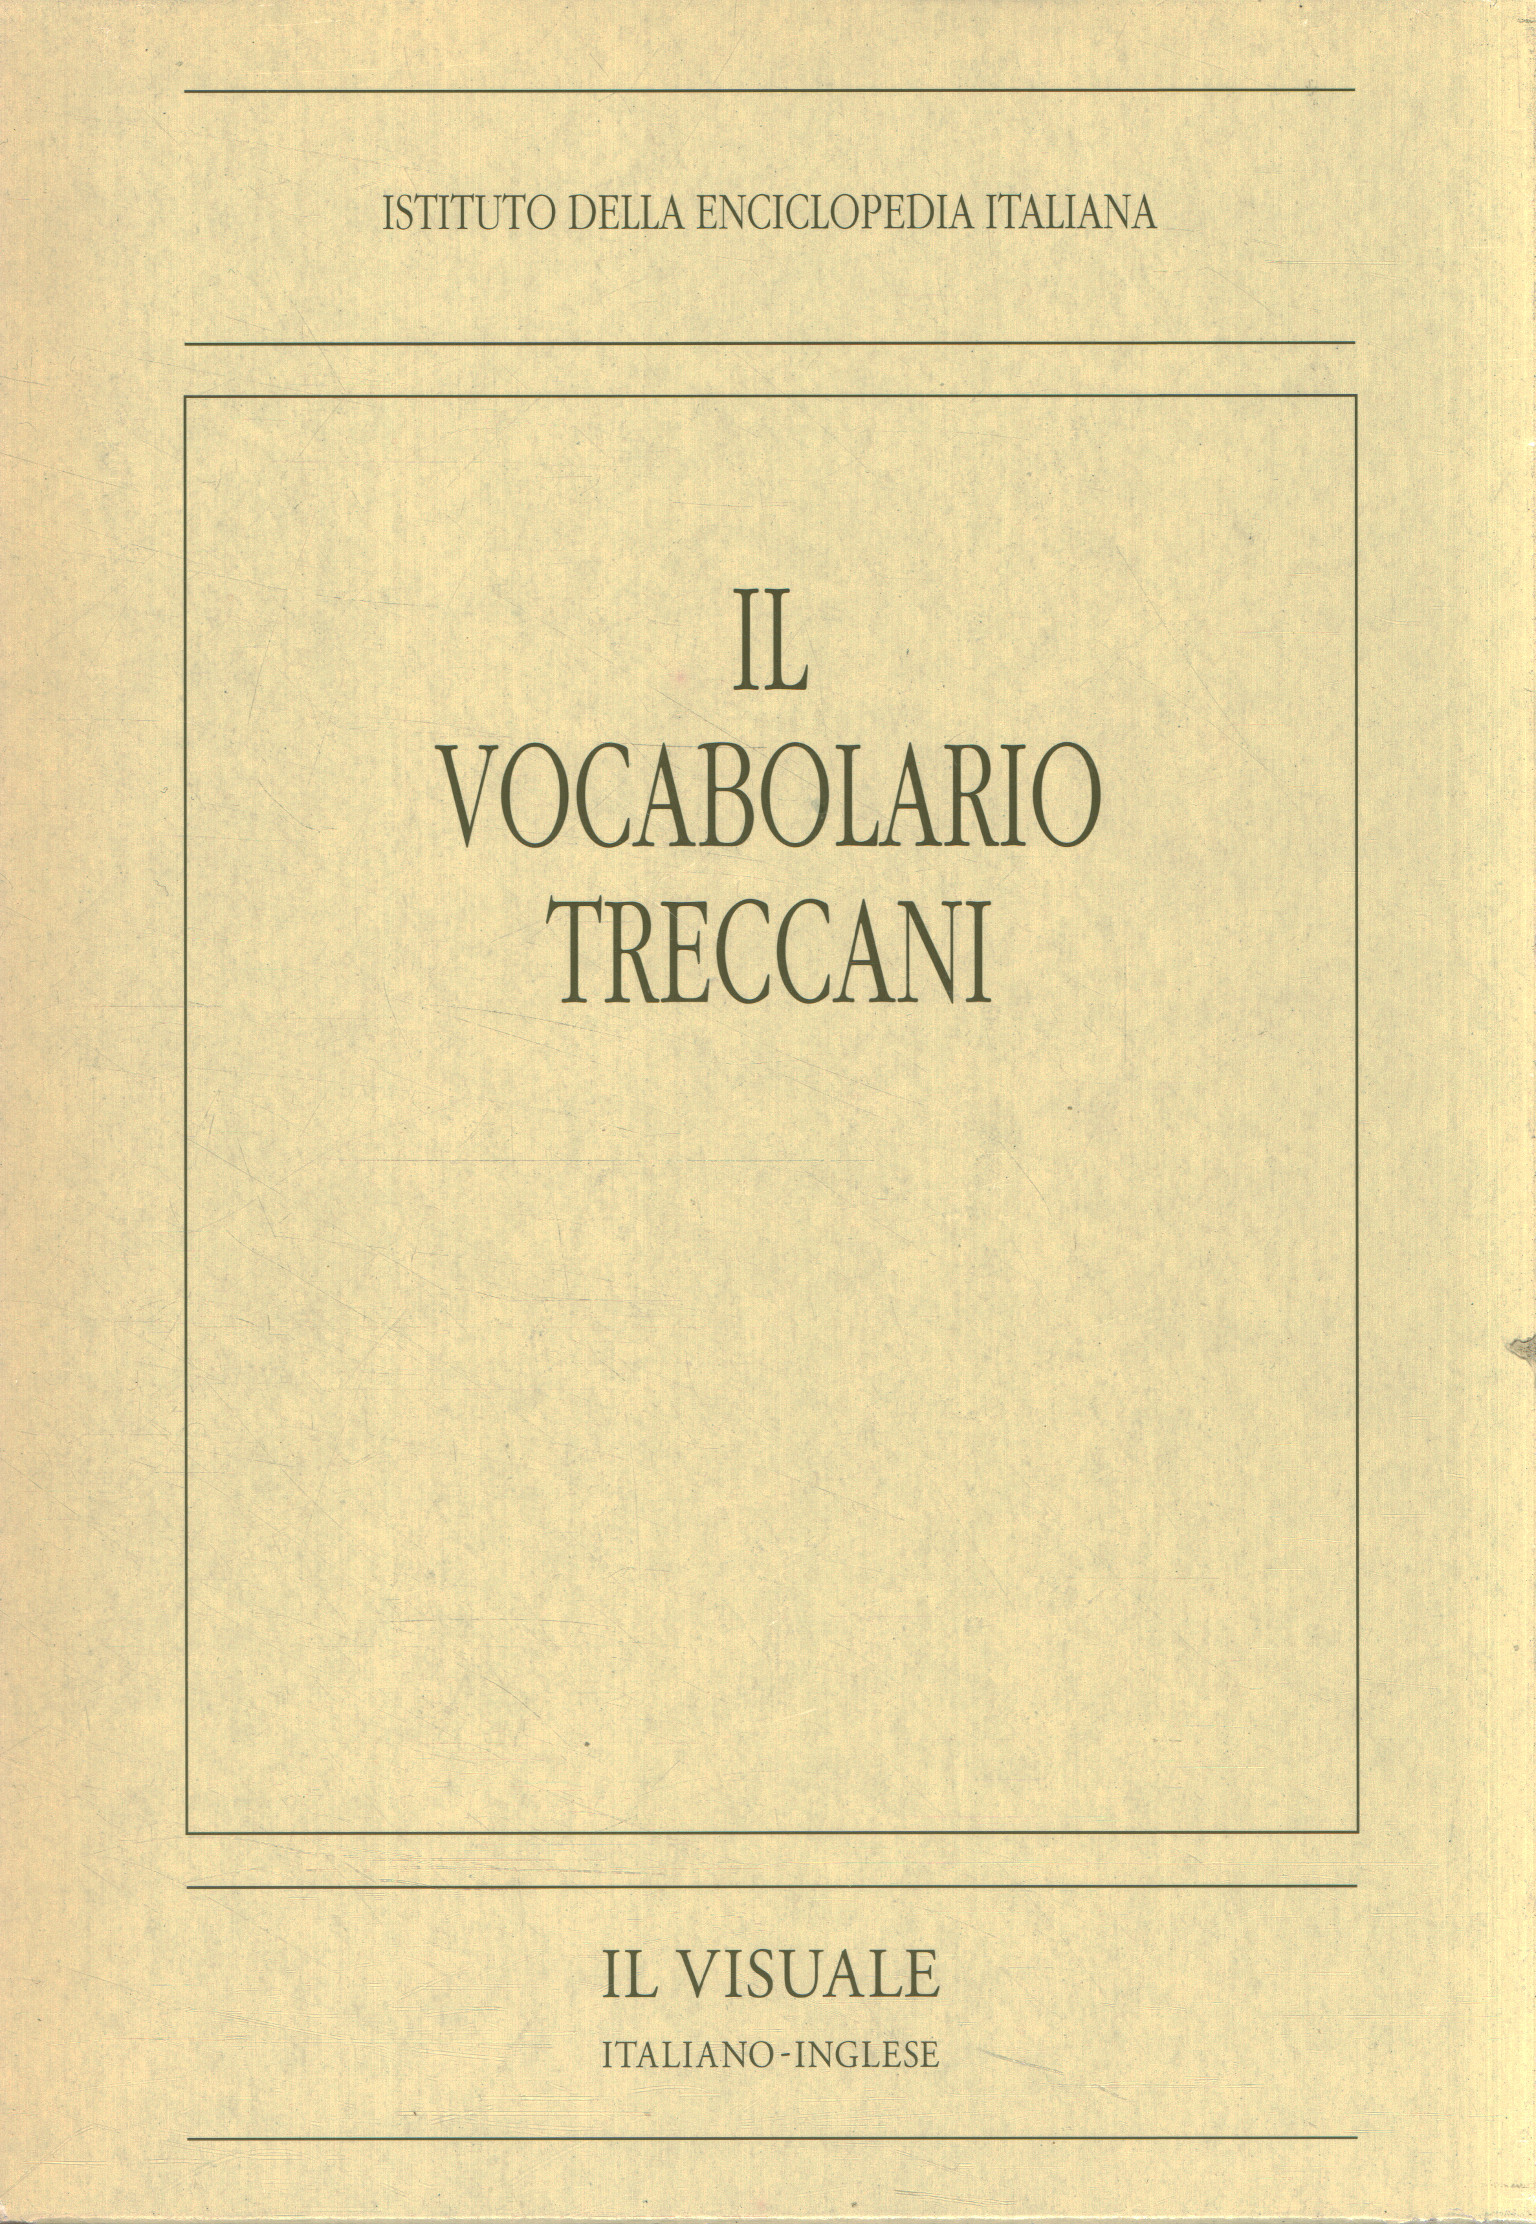 Das Treccani-Vokabular. Das italienische Bild